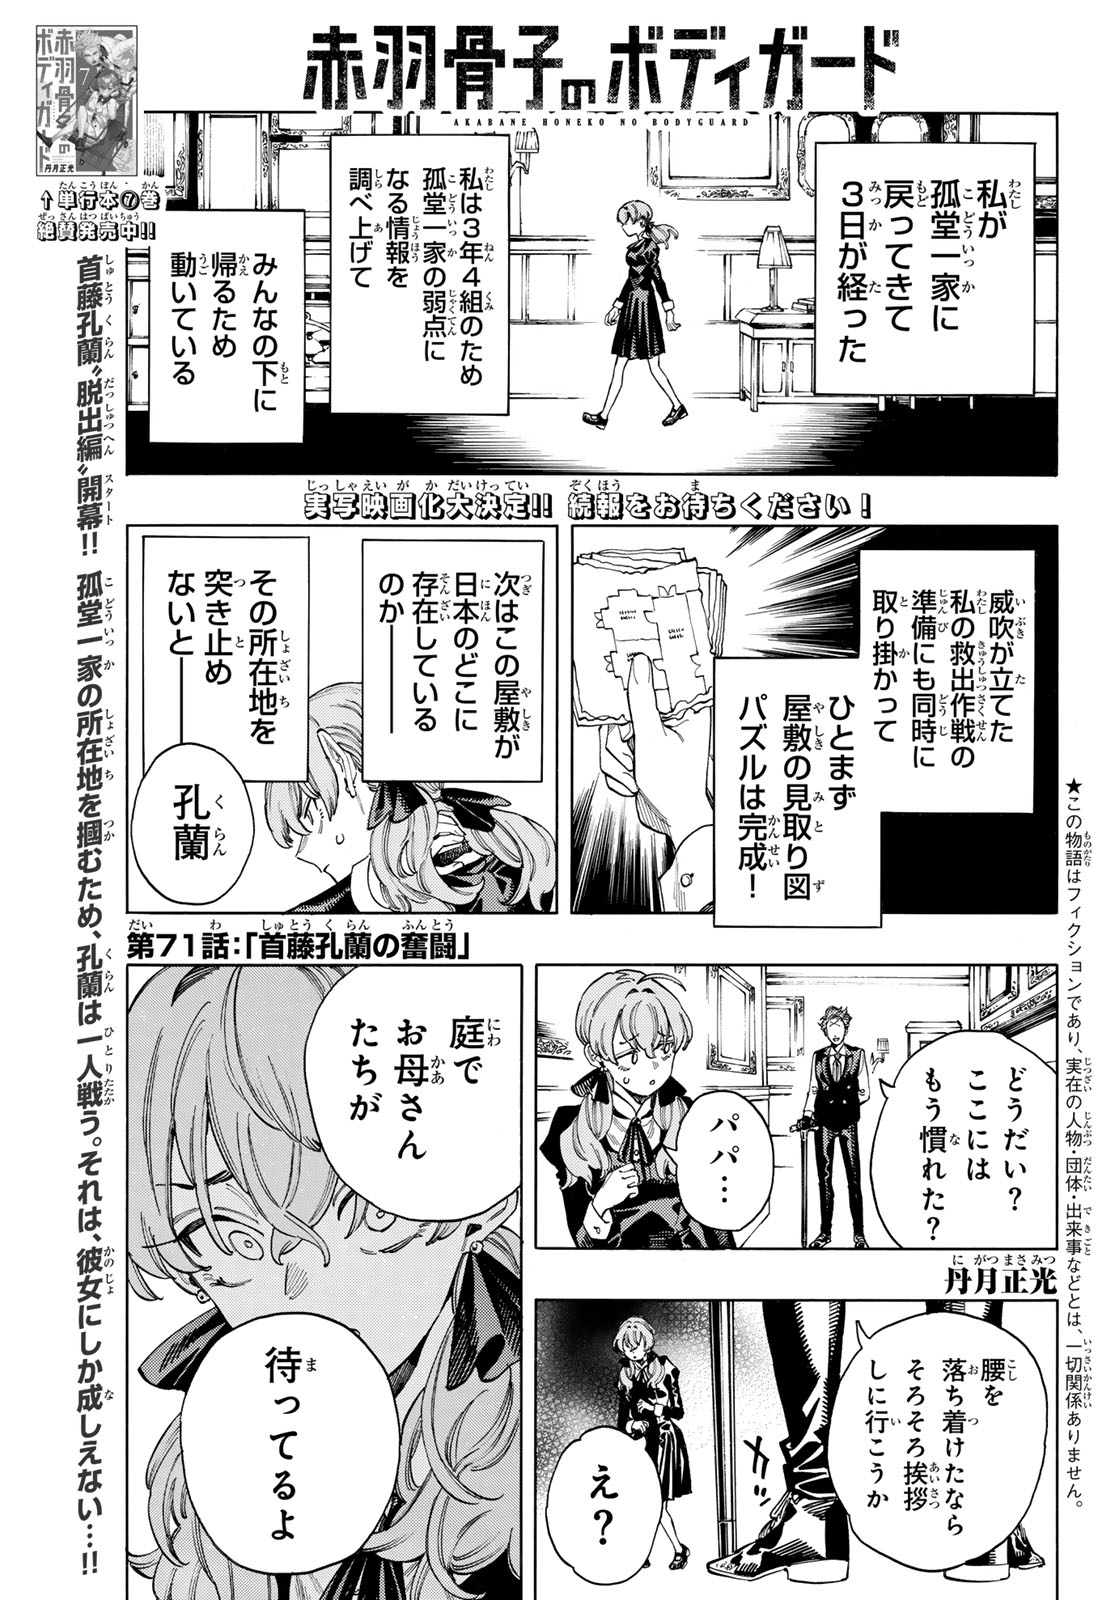 Akabane Honeko no Bodyguard - Chapter 71 - Page 1